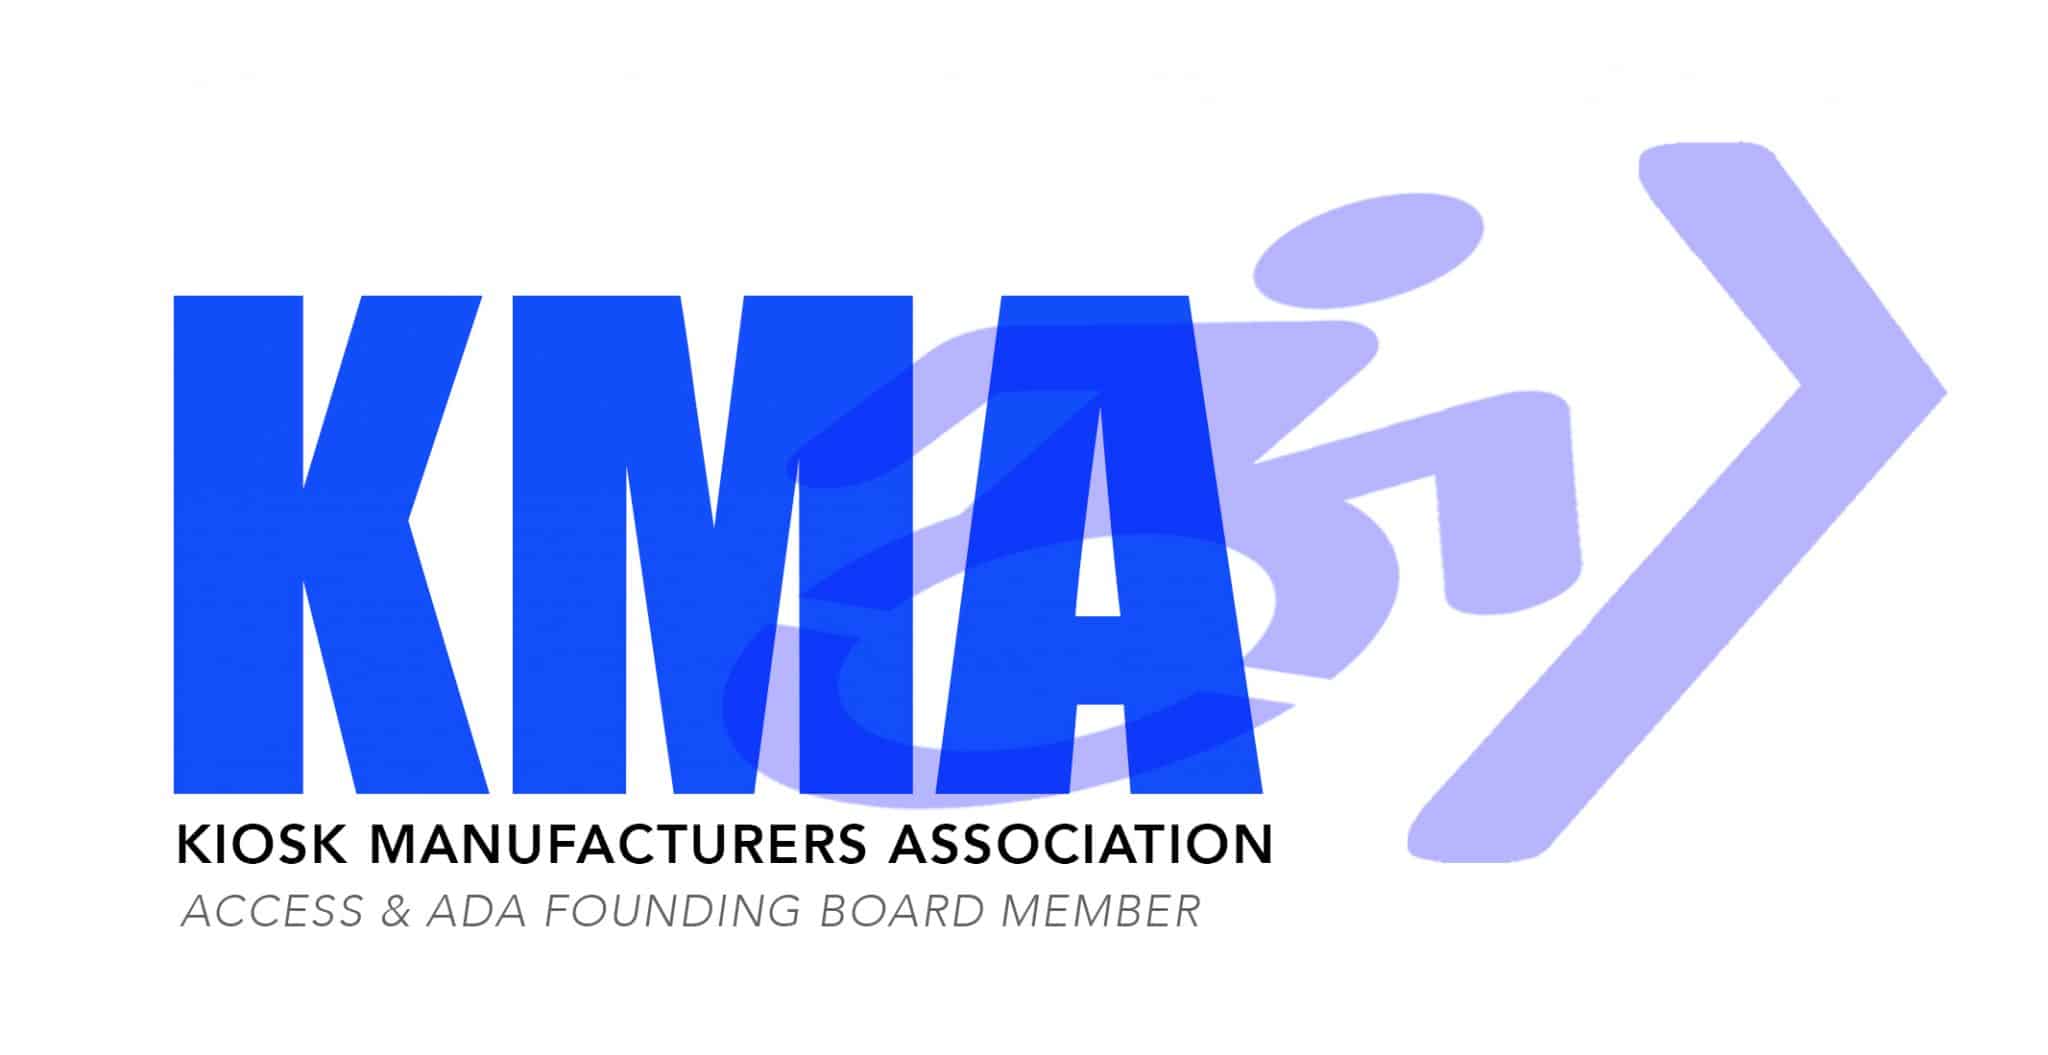 Kiosk Manufacturer Association